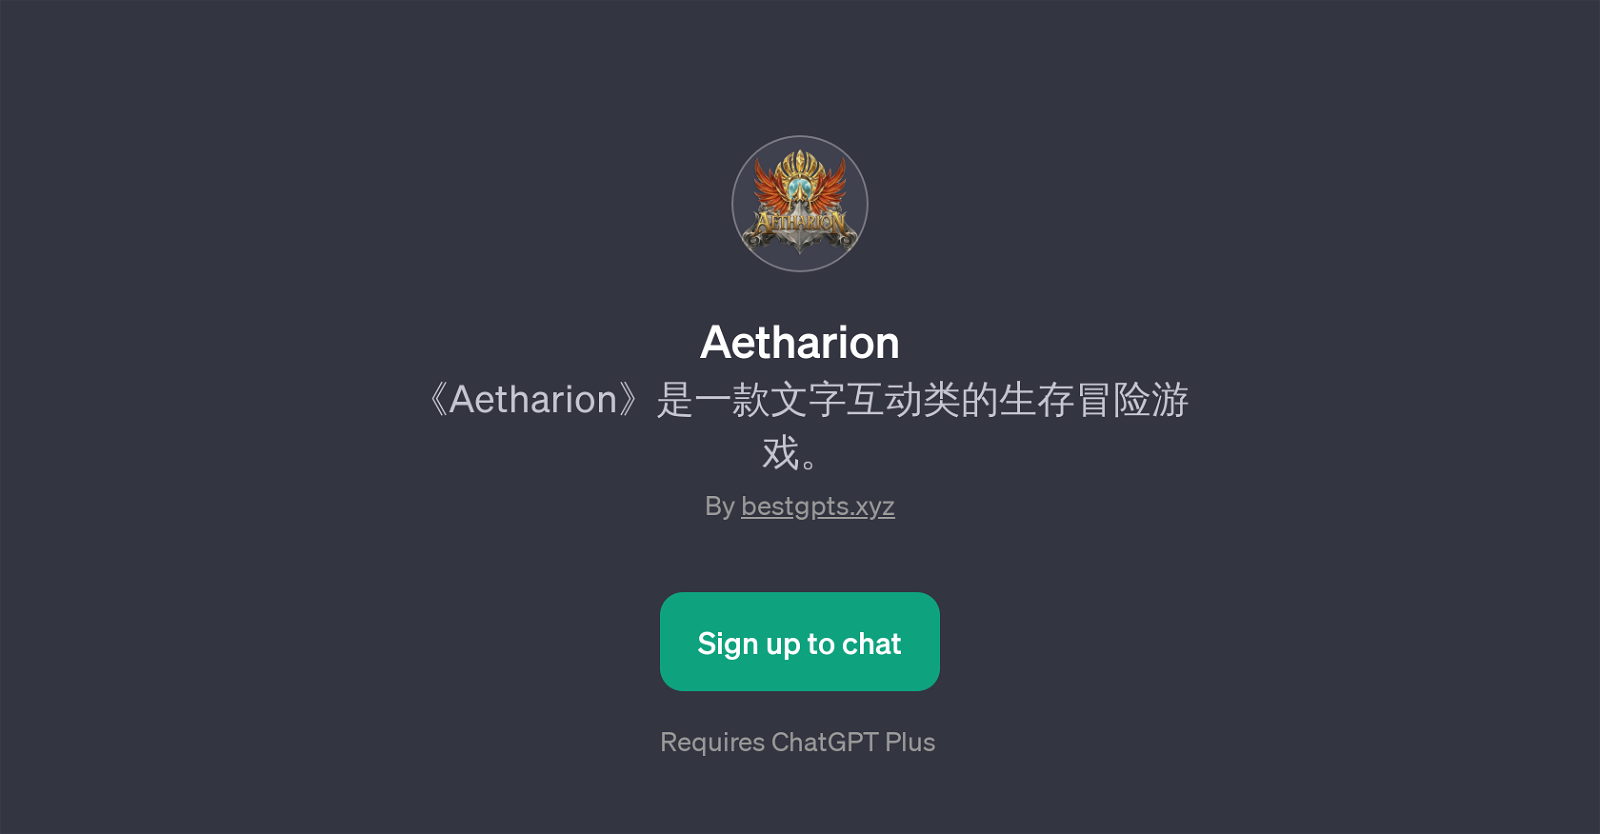 Aetharion website